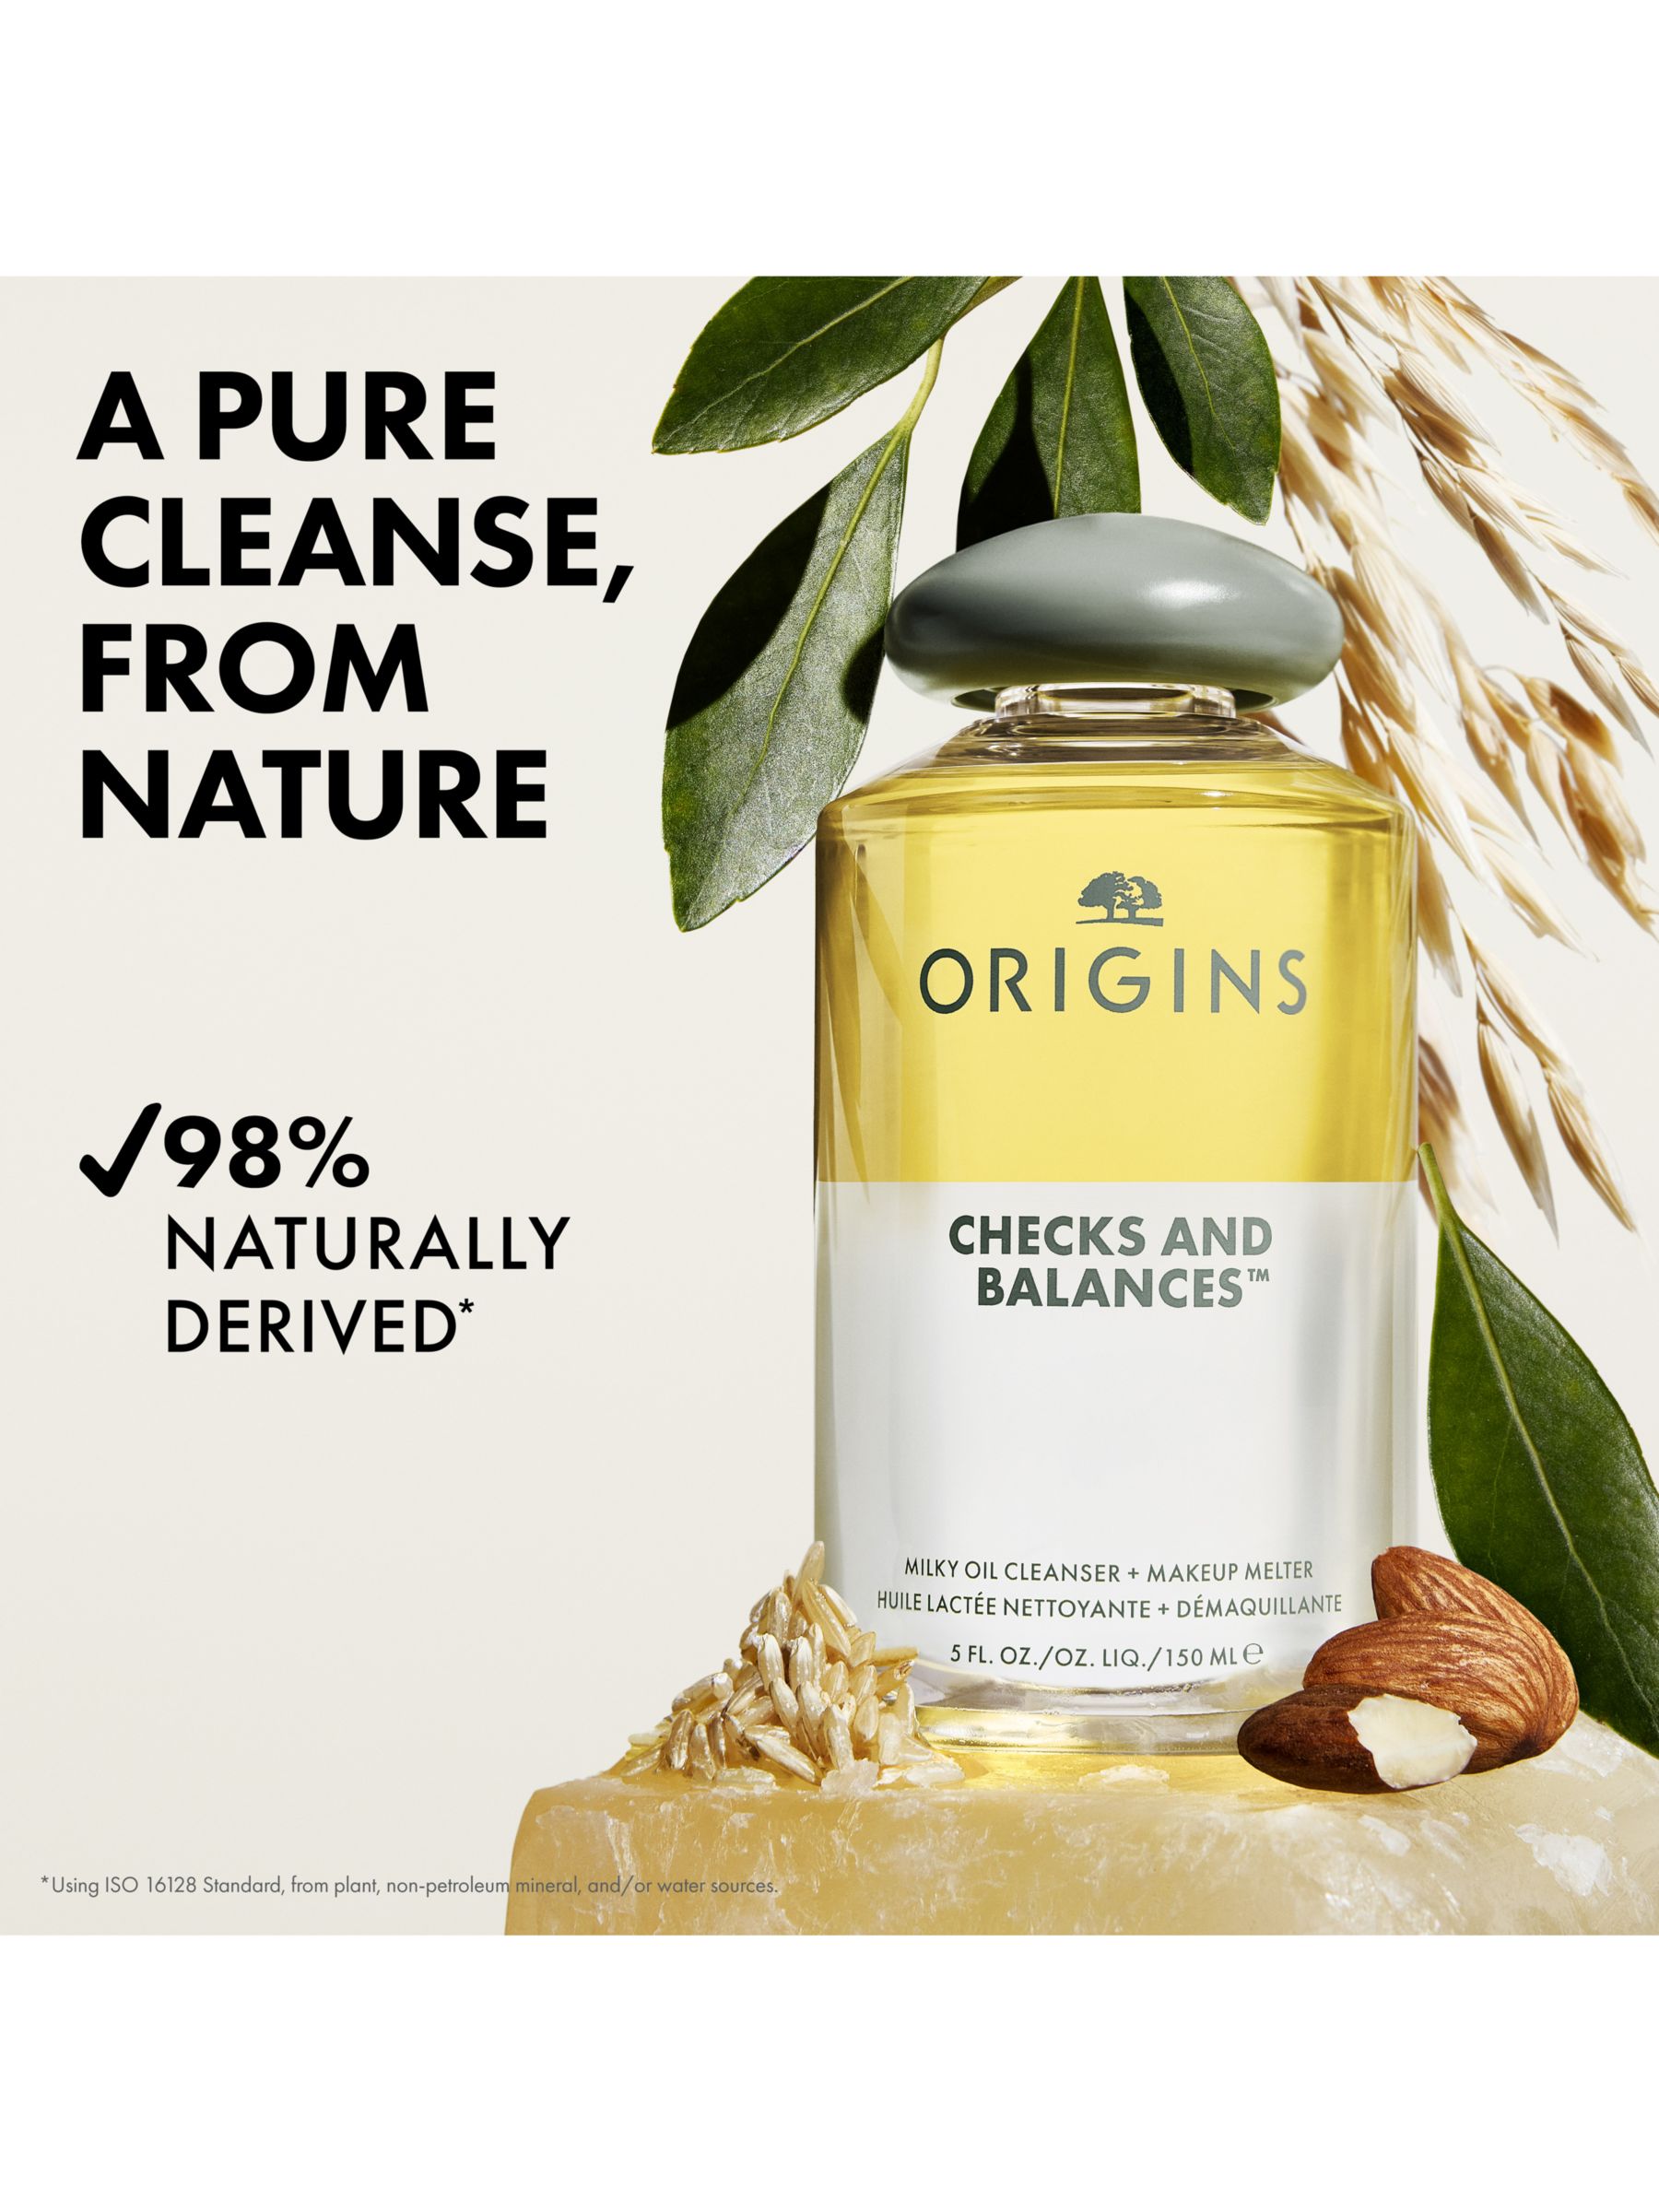 Origins Checks And Balances Milk to Oil Cleanser + Makeup Melter, 150ml 6